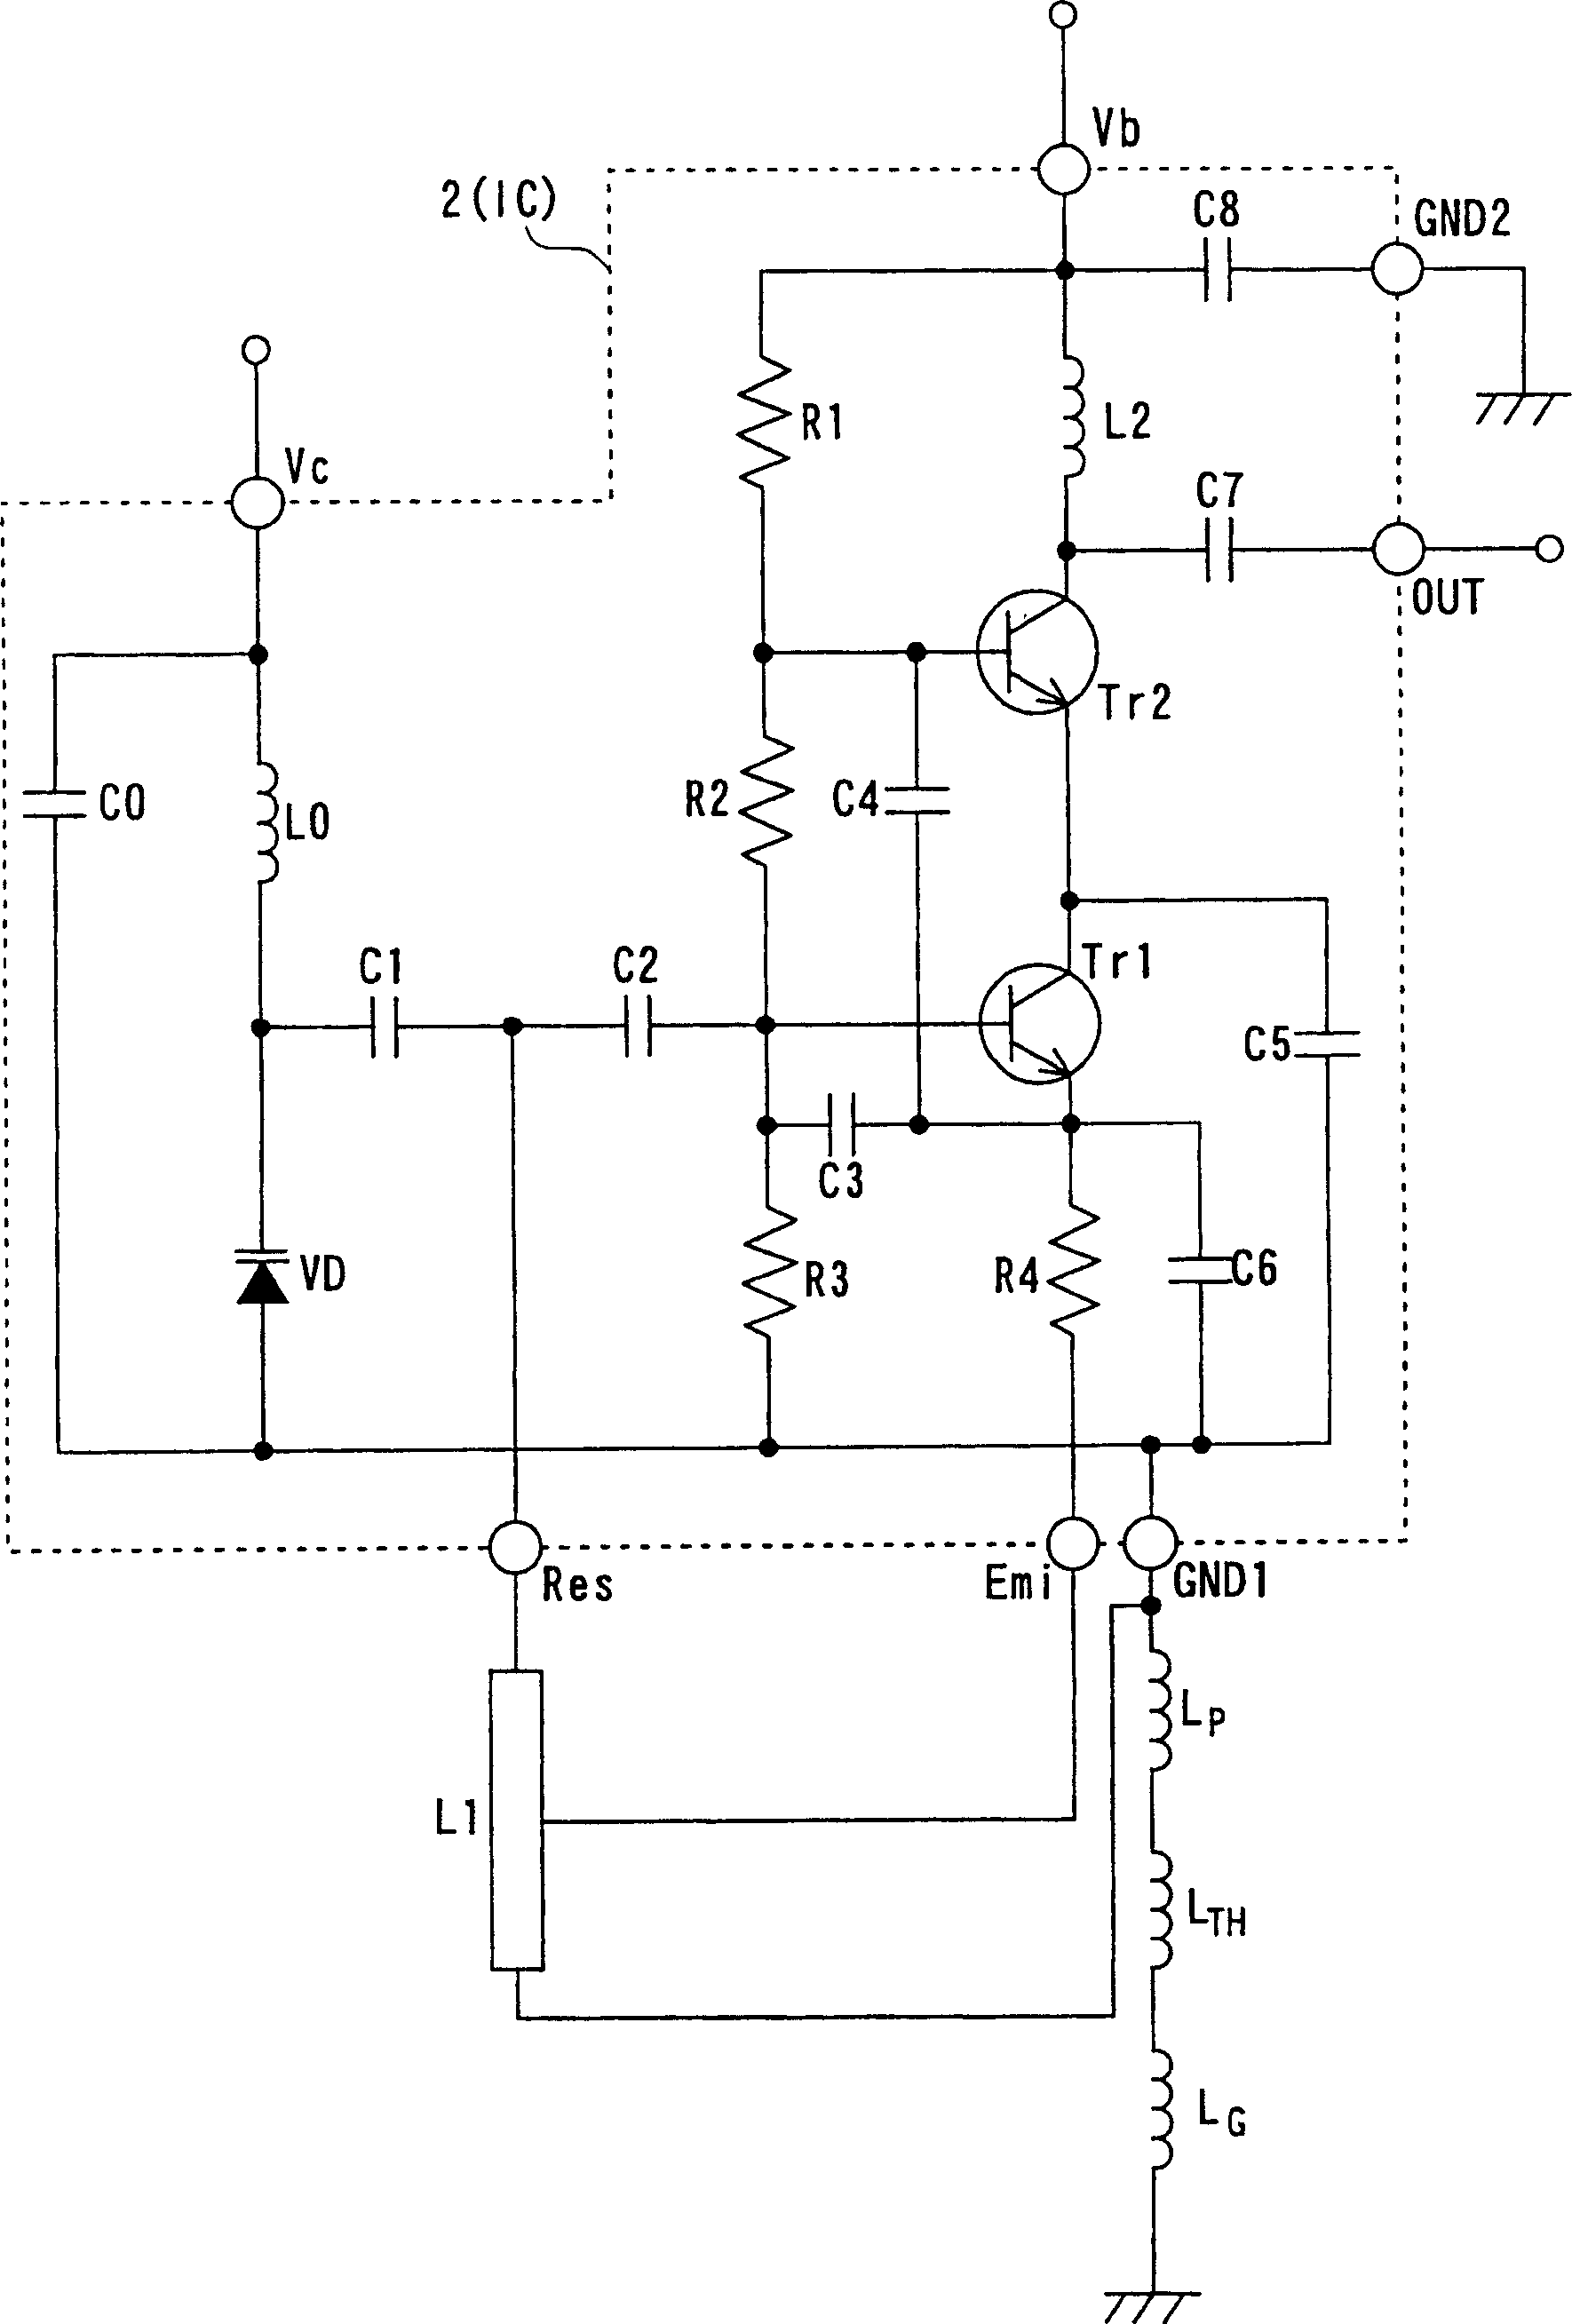 High frequency oscillator